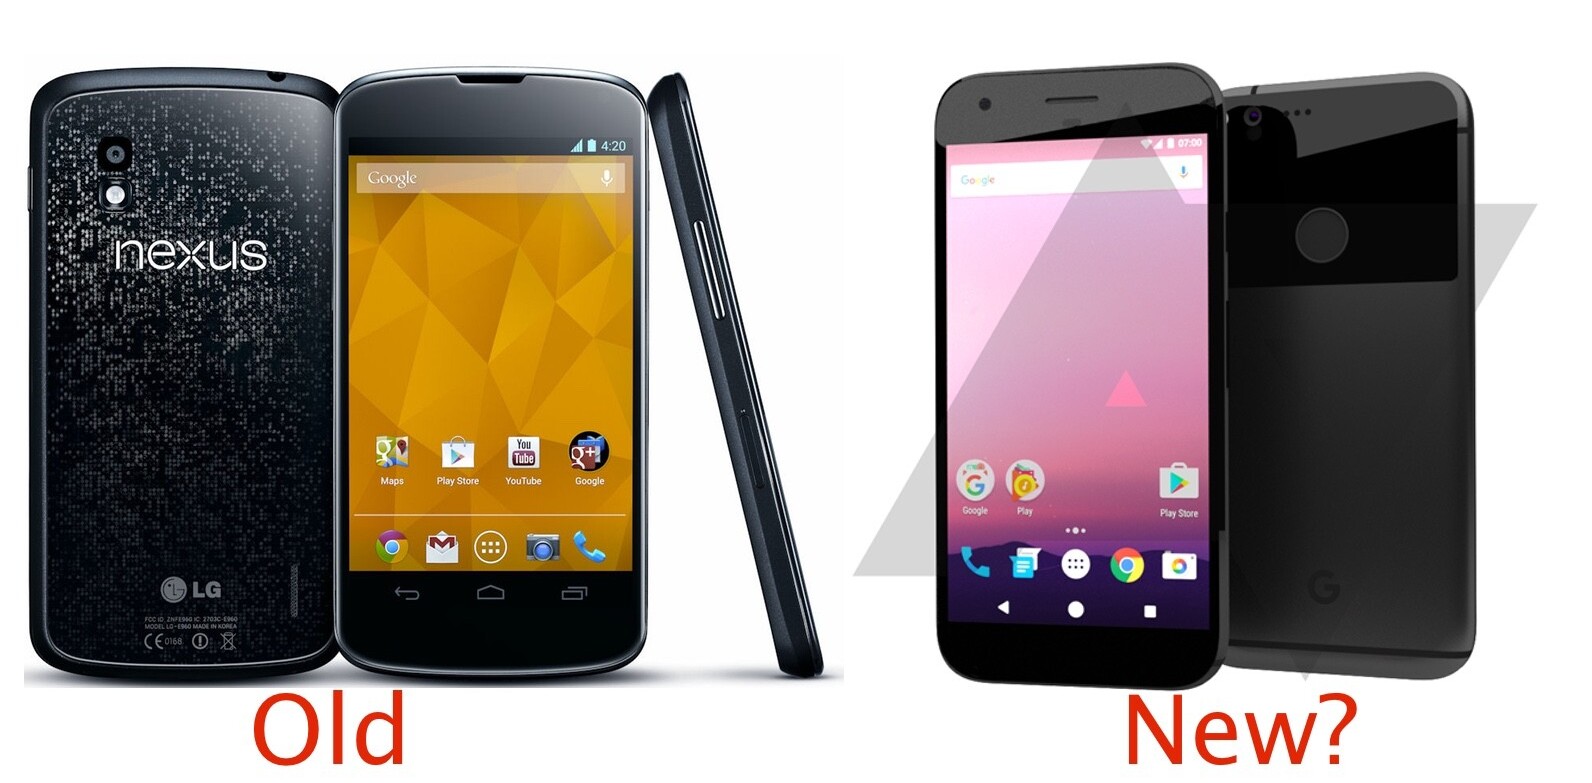 Google’s HTC-built 2016 Nexus may look a lot like the 2012 Nexus 4